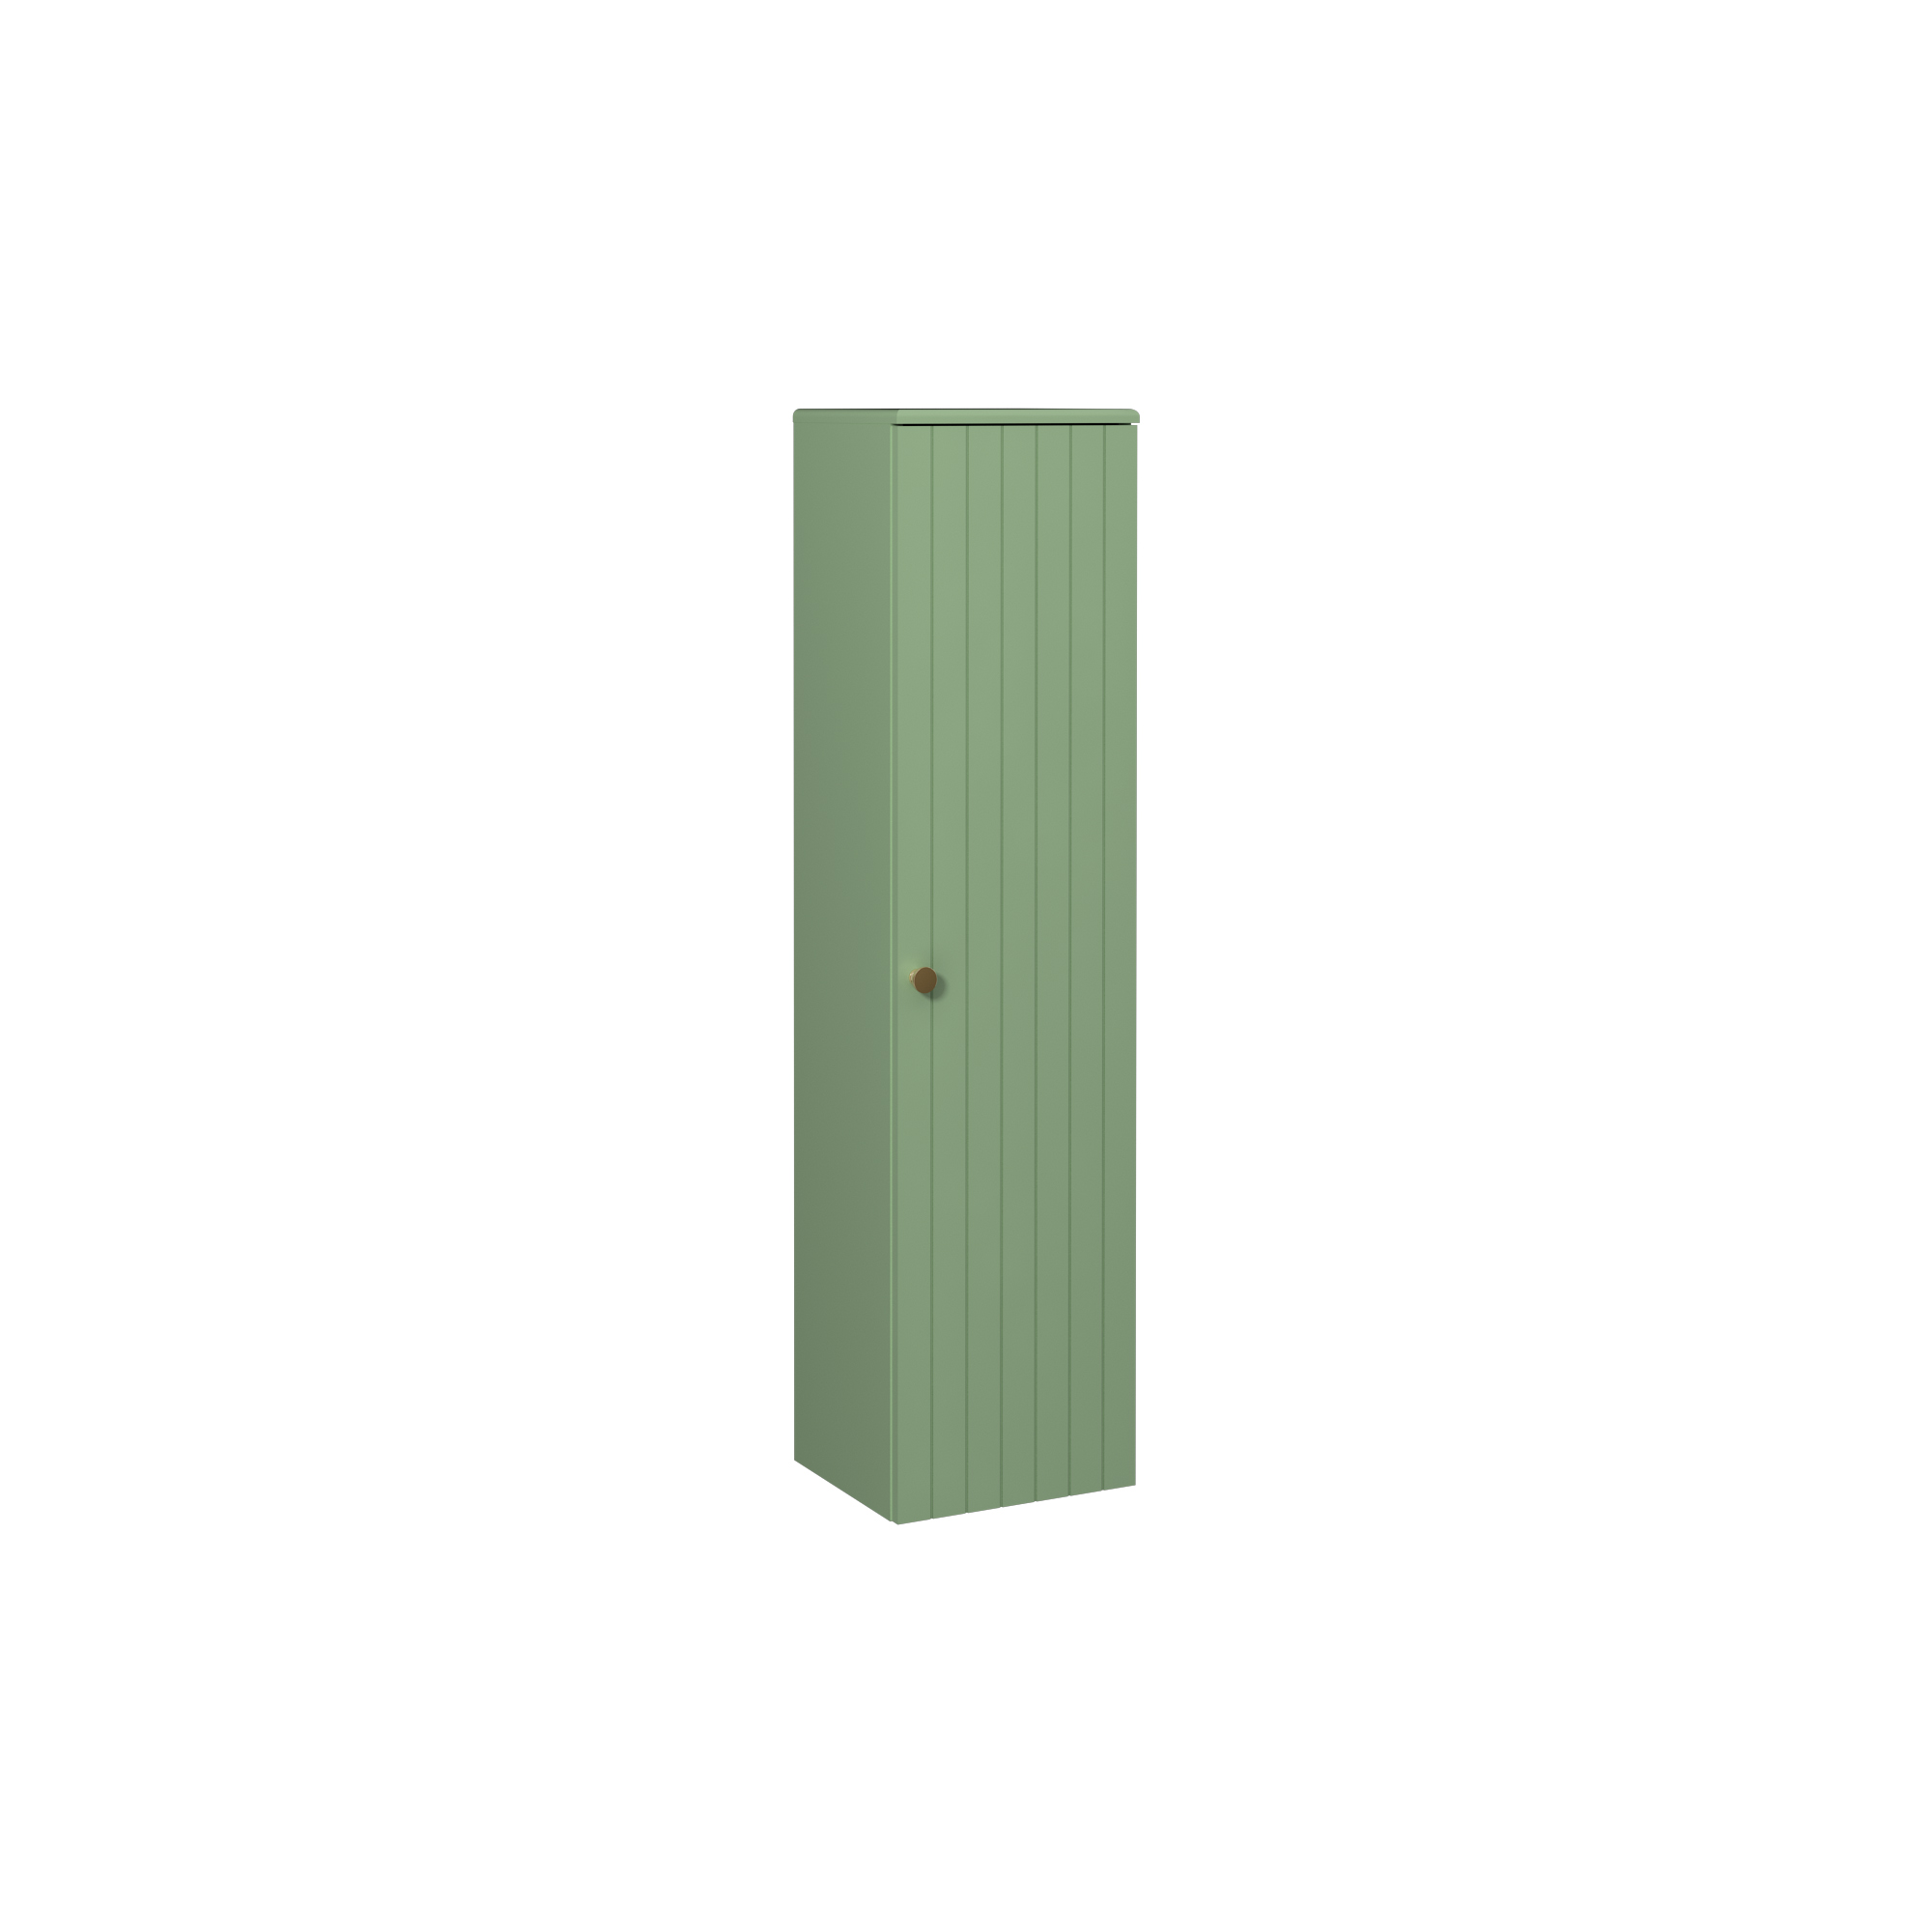 Rinato 35 cm Tall Cabinet, Pastel Green Left